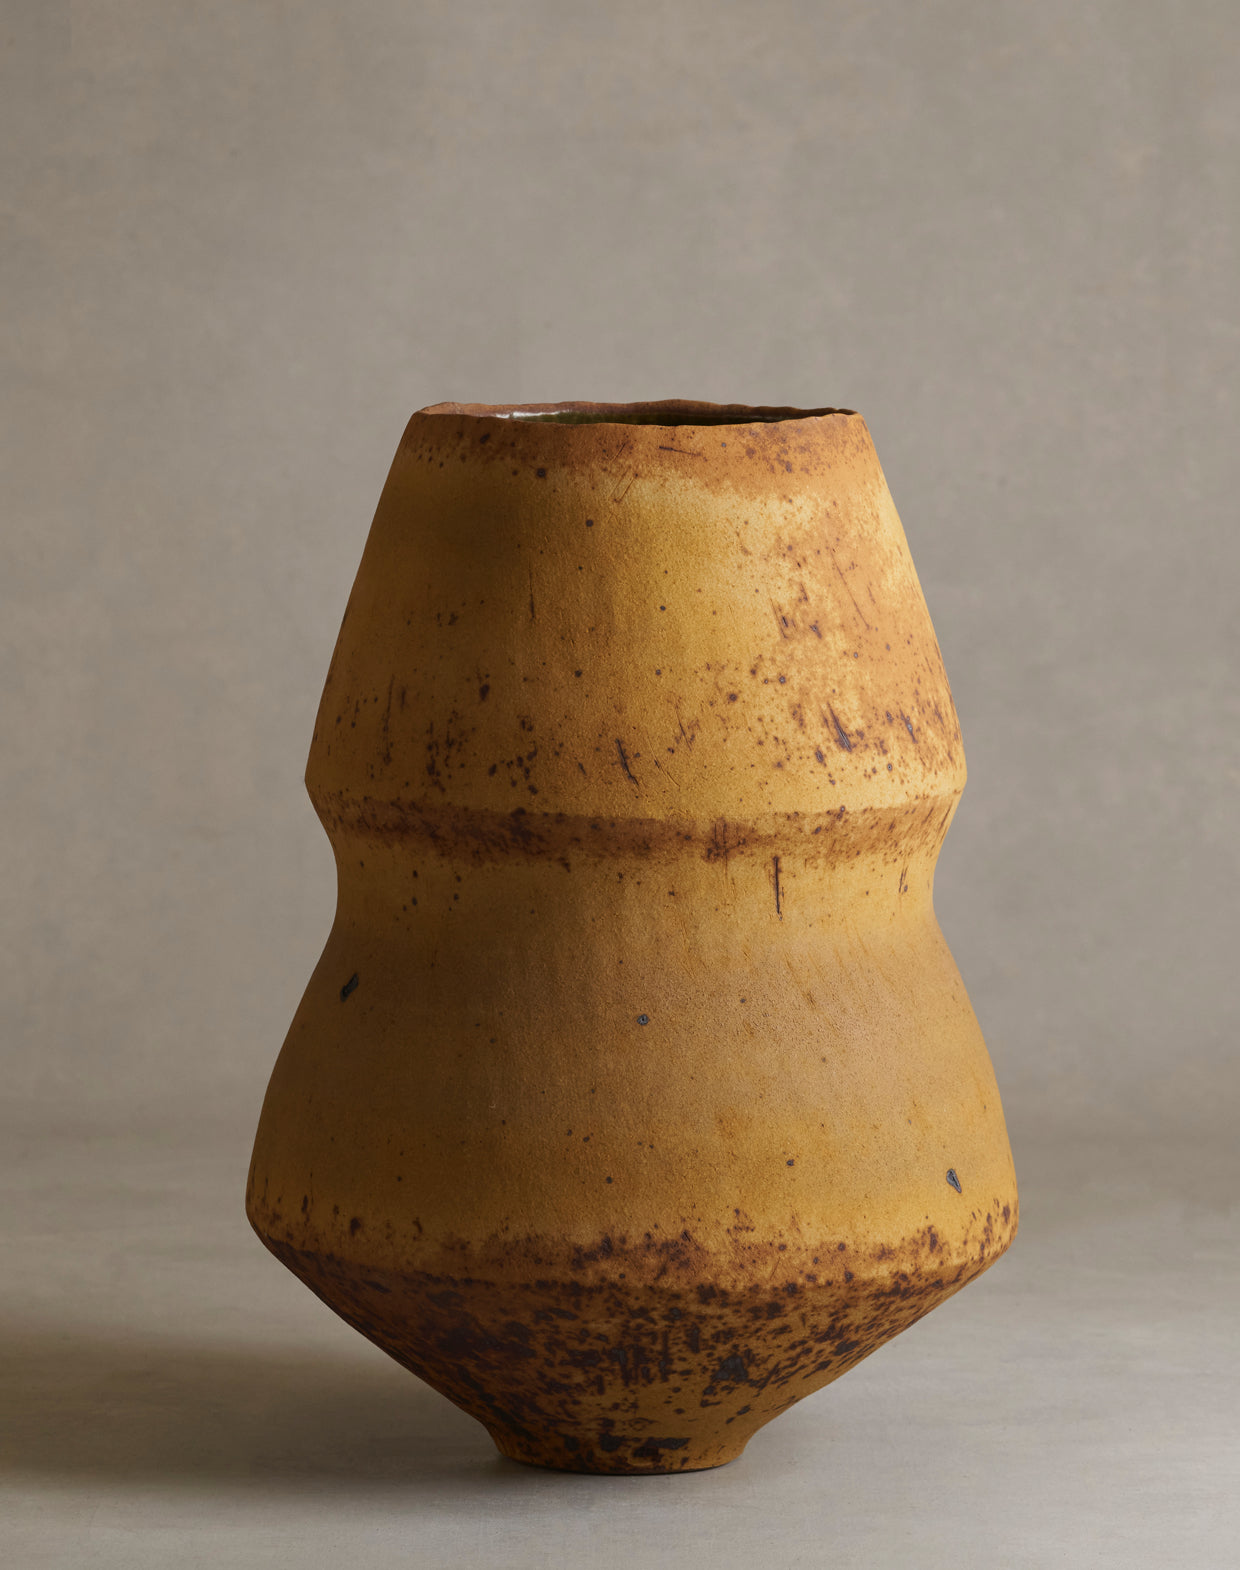 Rick Hintze Coiled Stoneware Vessel, "Untitled" No. 23